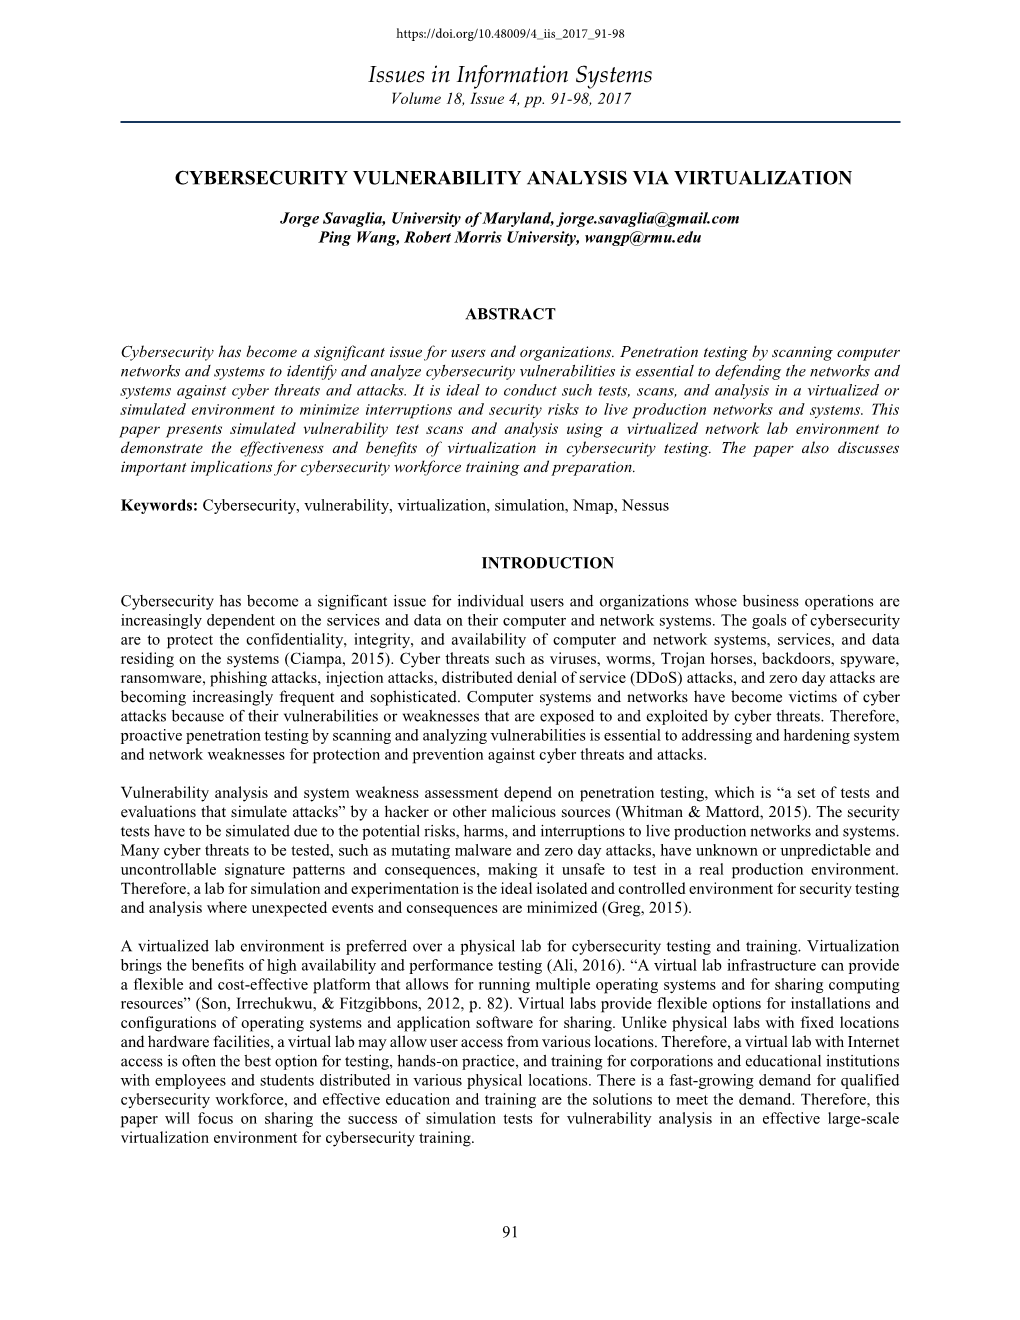 Cybersecurity Vulnerability Analysis Via Virtualization